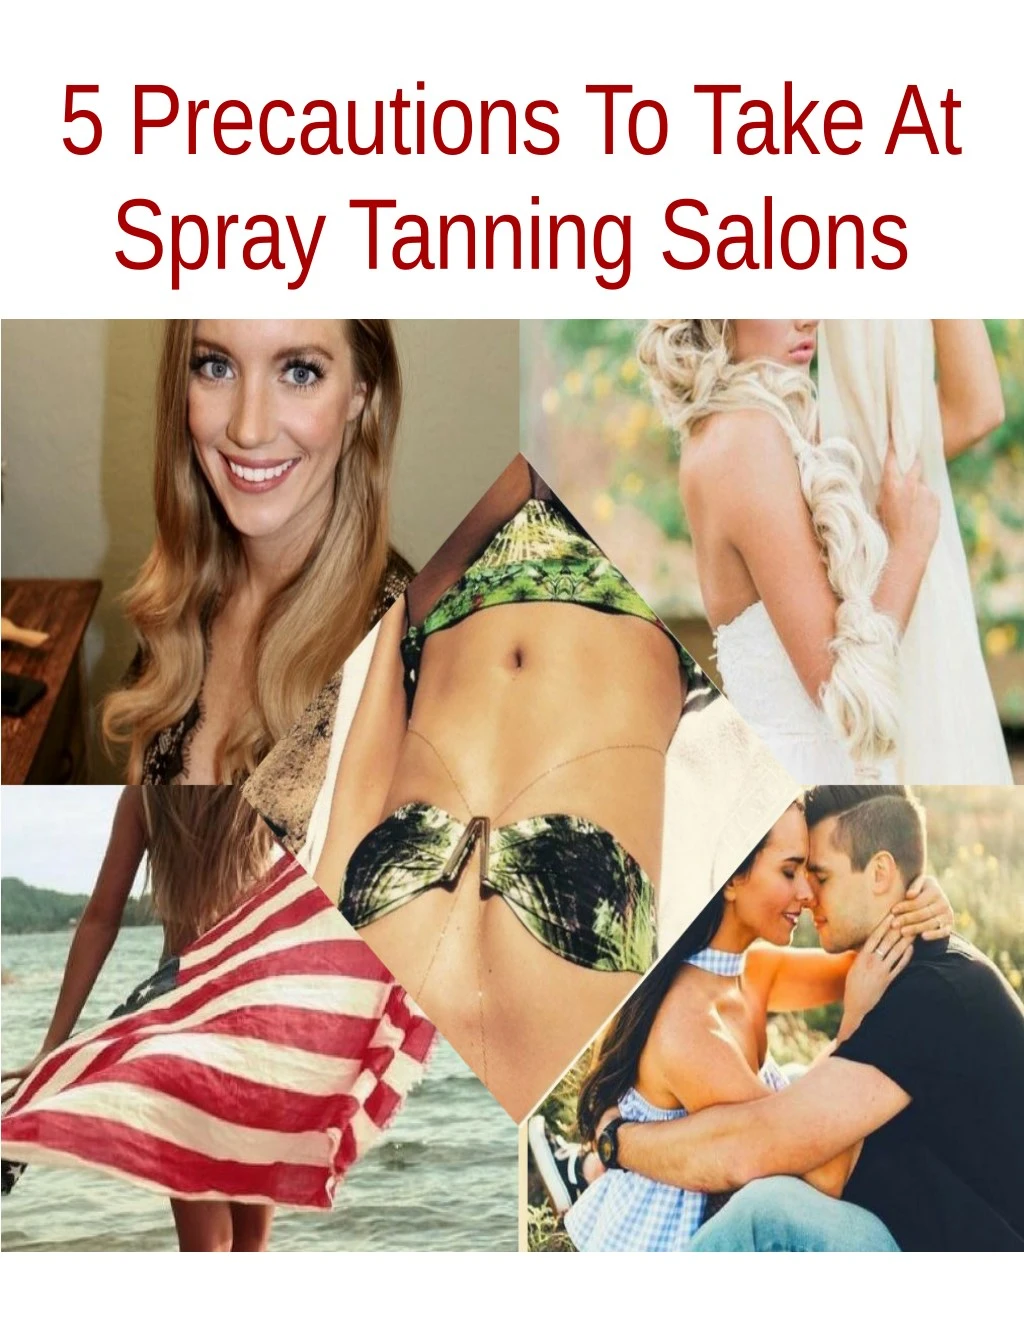 5 precautions to take at spray tanning salons